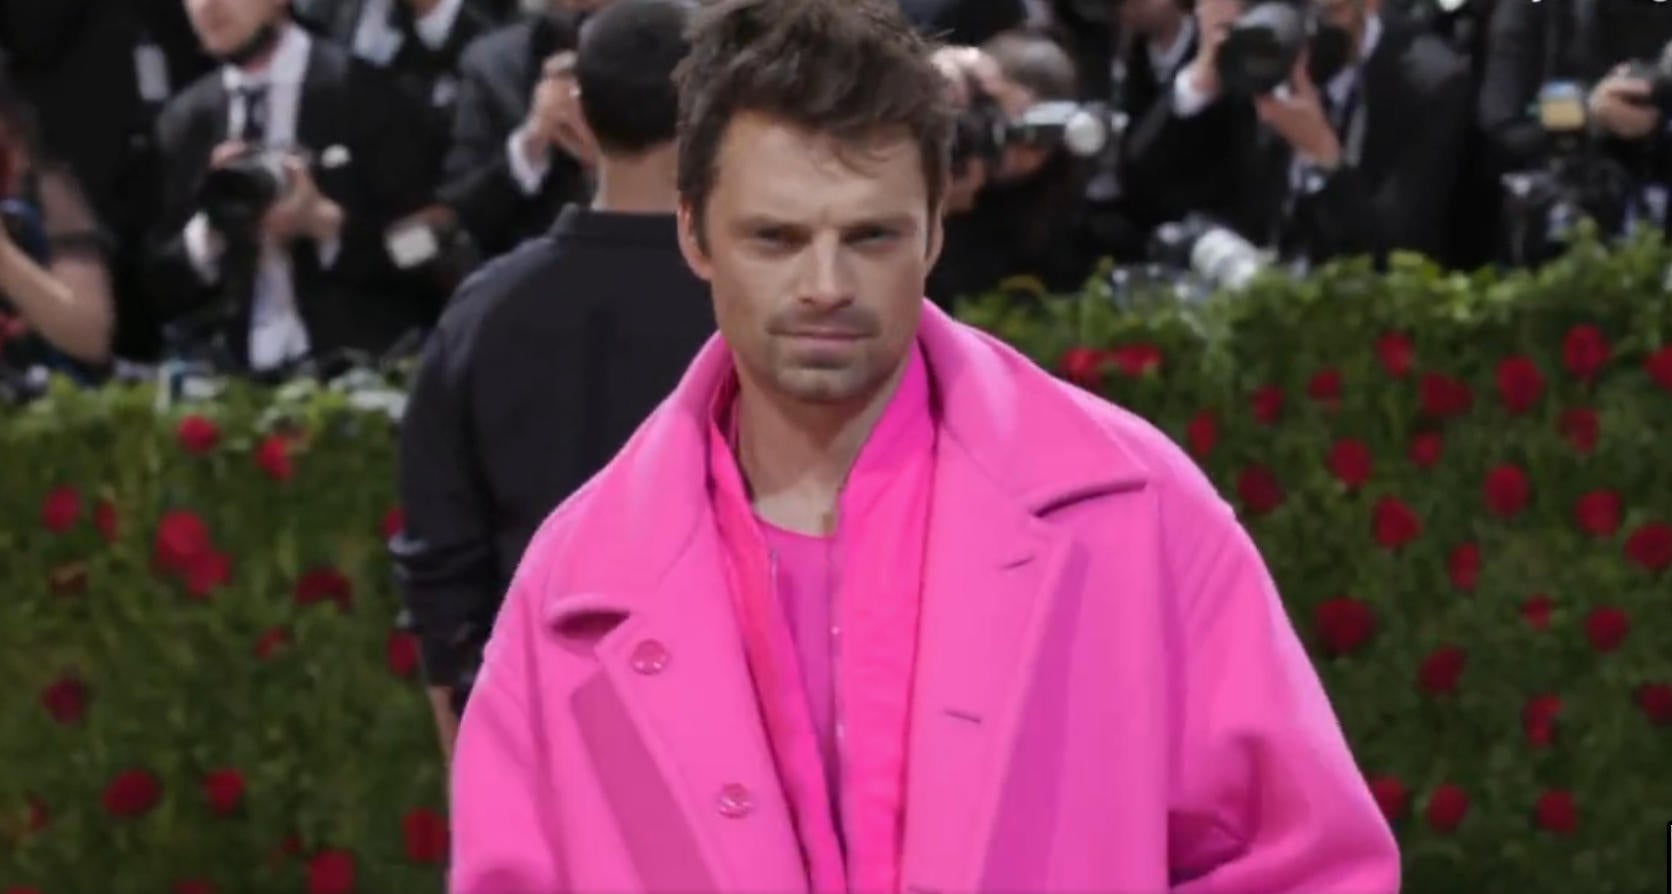 met-gala-2022-best-fashion-looks-sebastian-stan-pink-suit